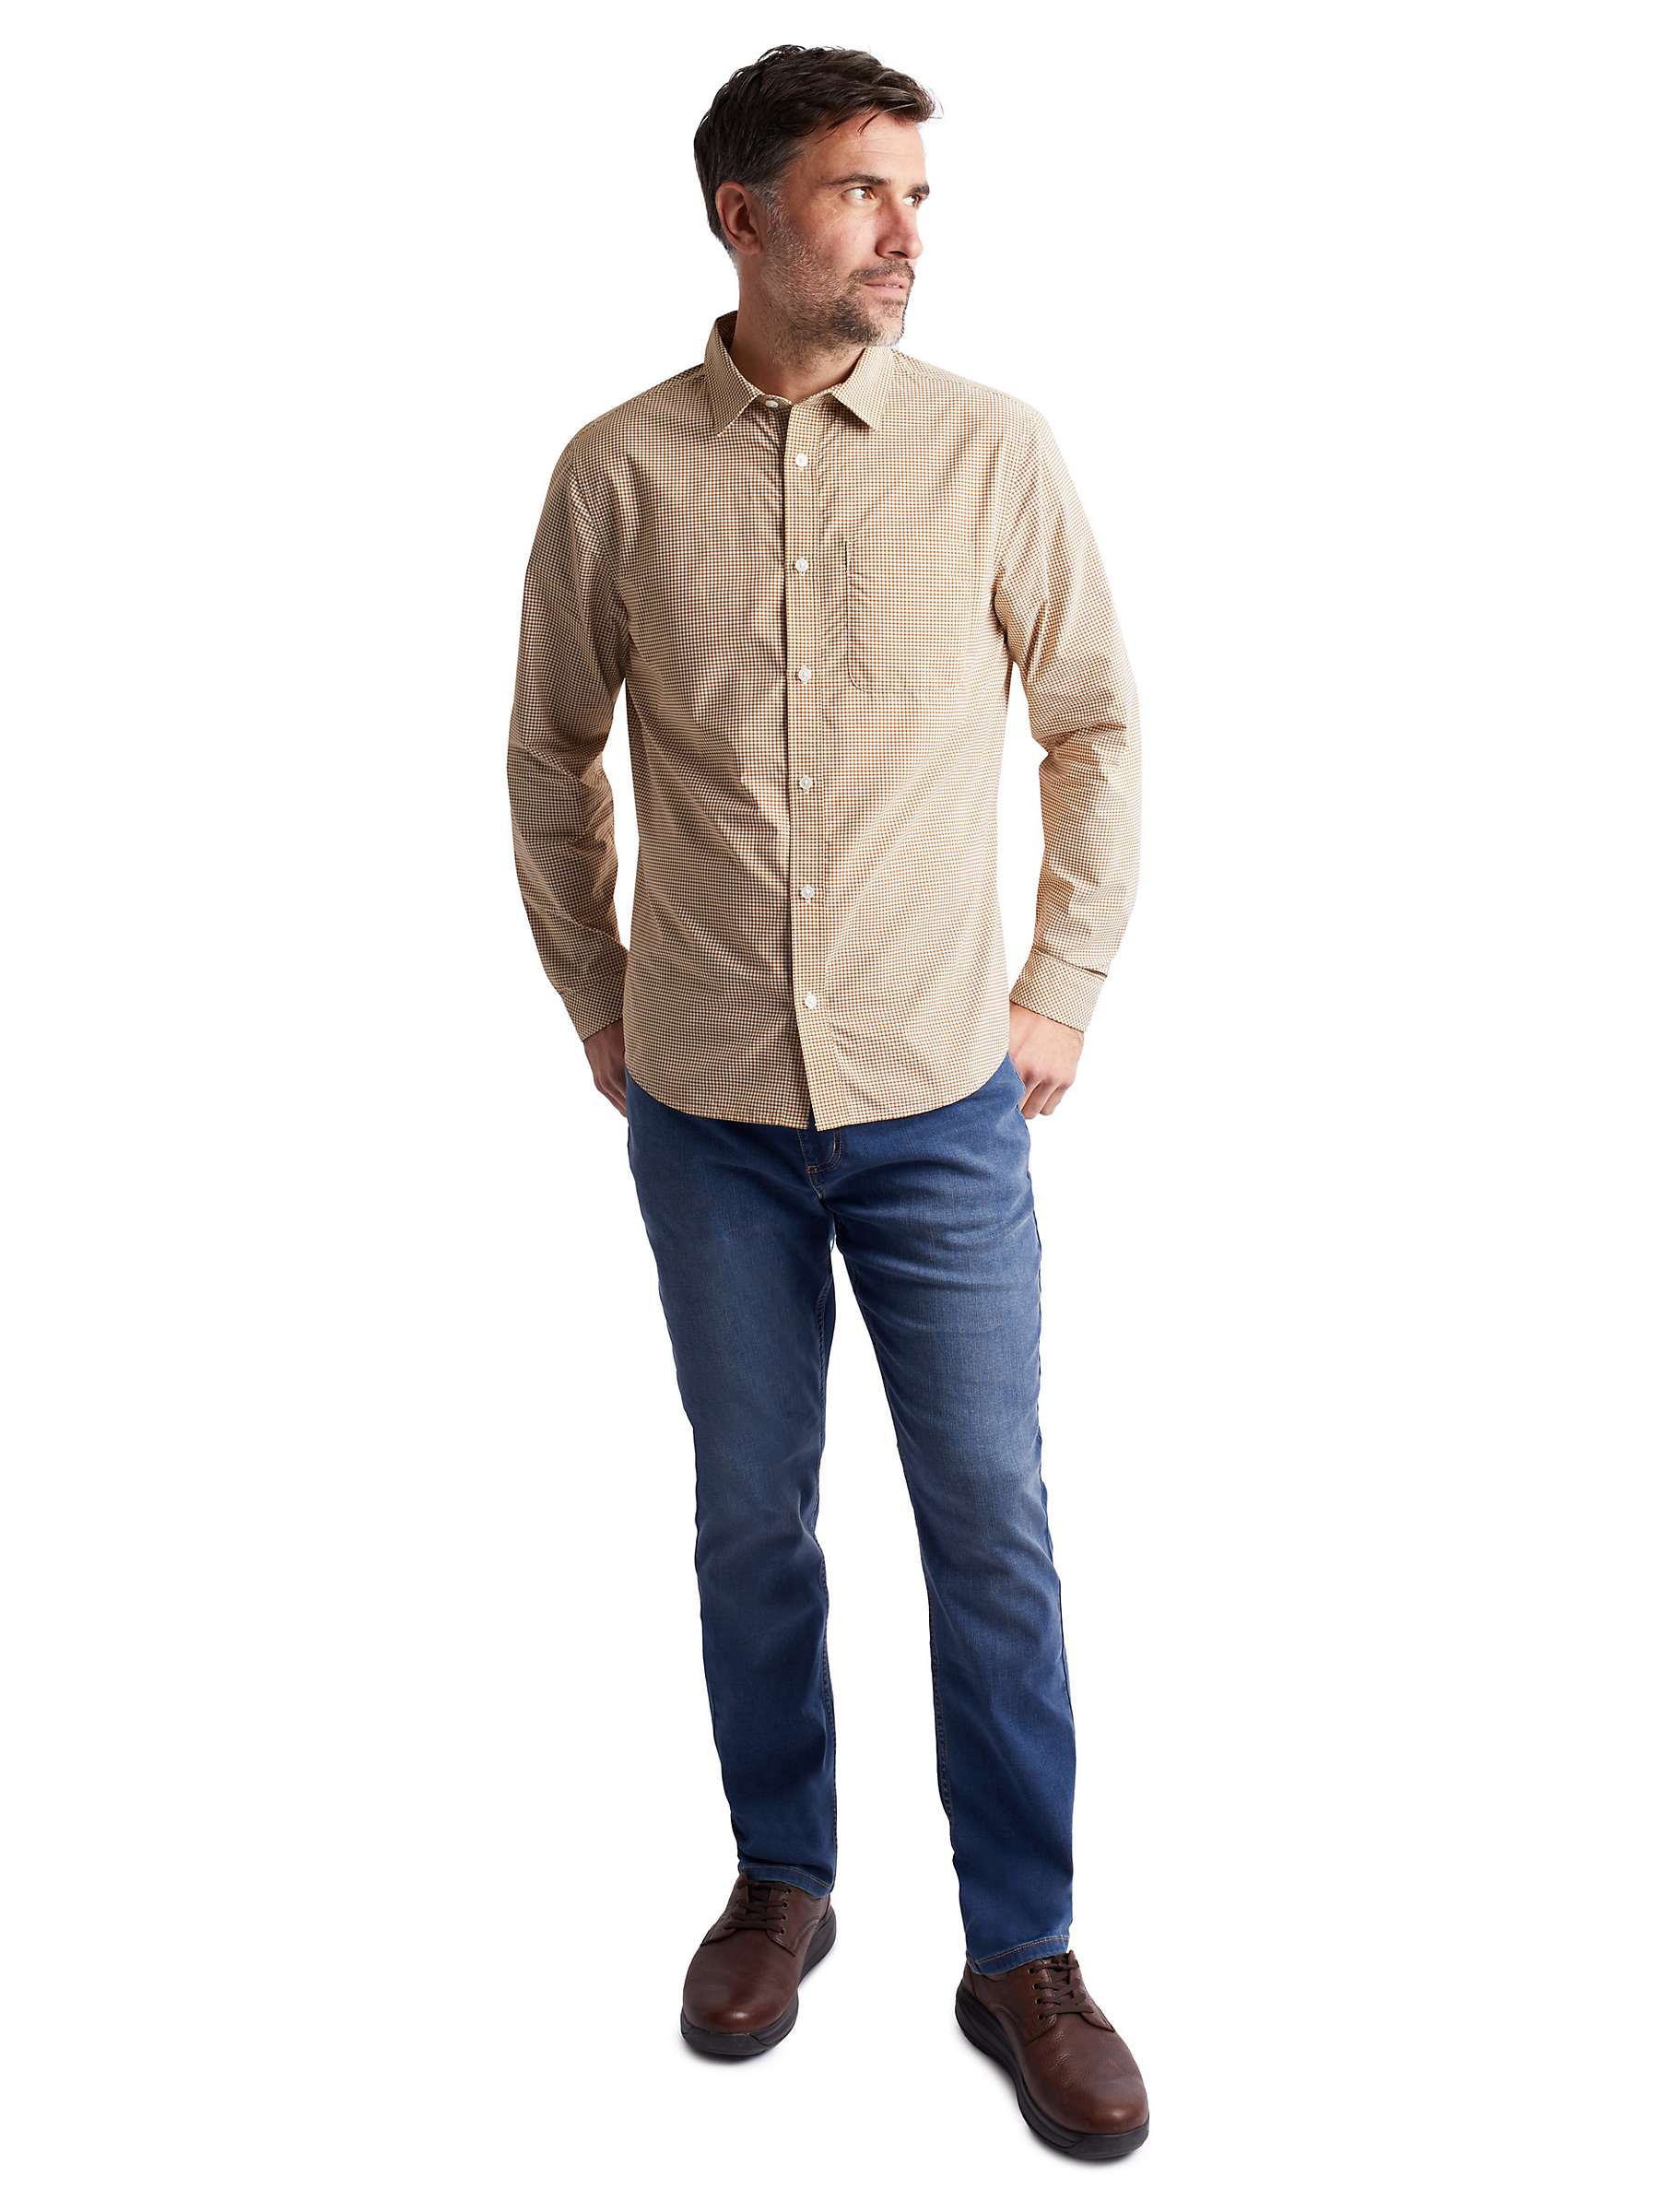 Buy Rohan Portland Long Sleeve Shirt, Desert Ochre Gingham Online at johnlewis.com